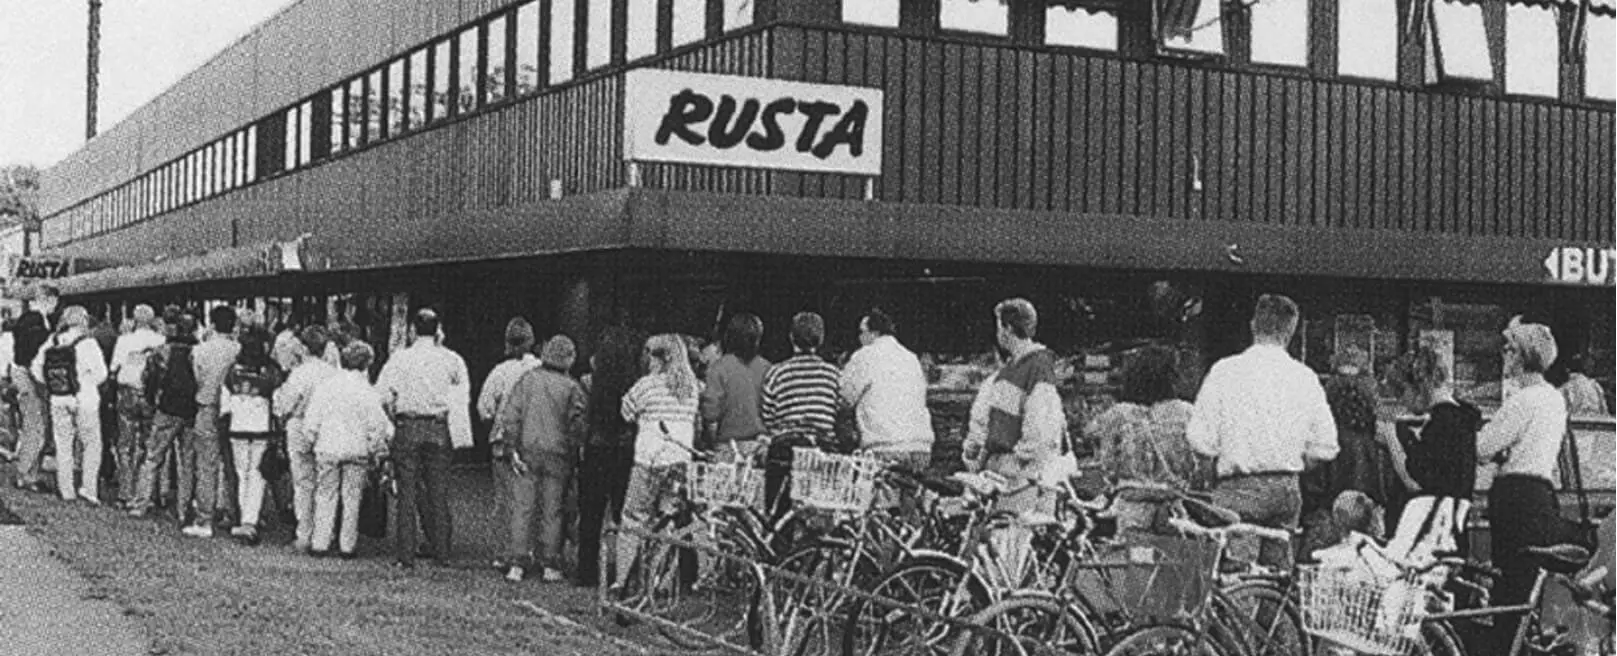 rusta-history-banner